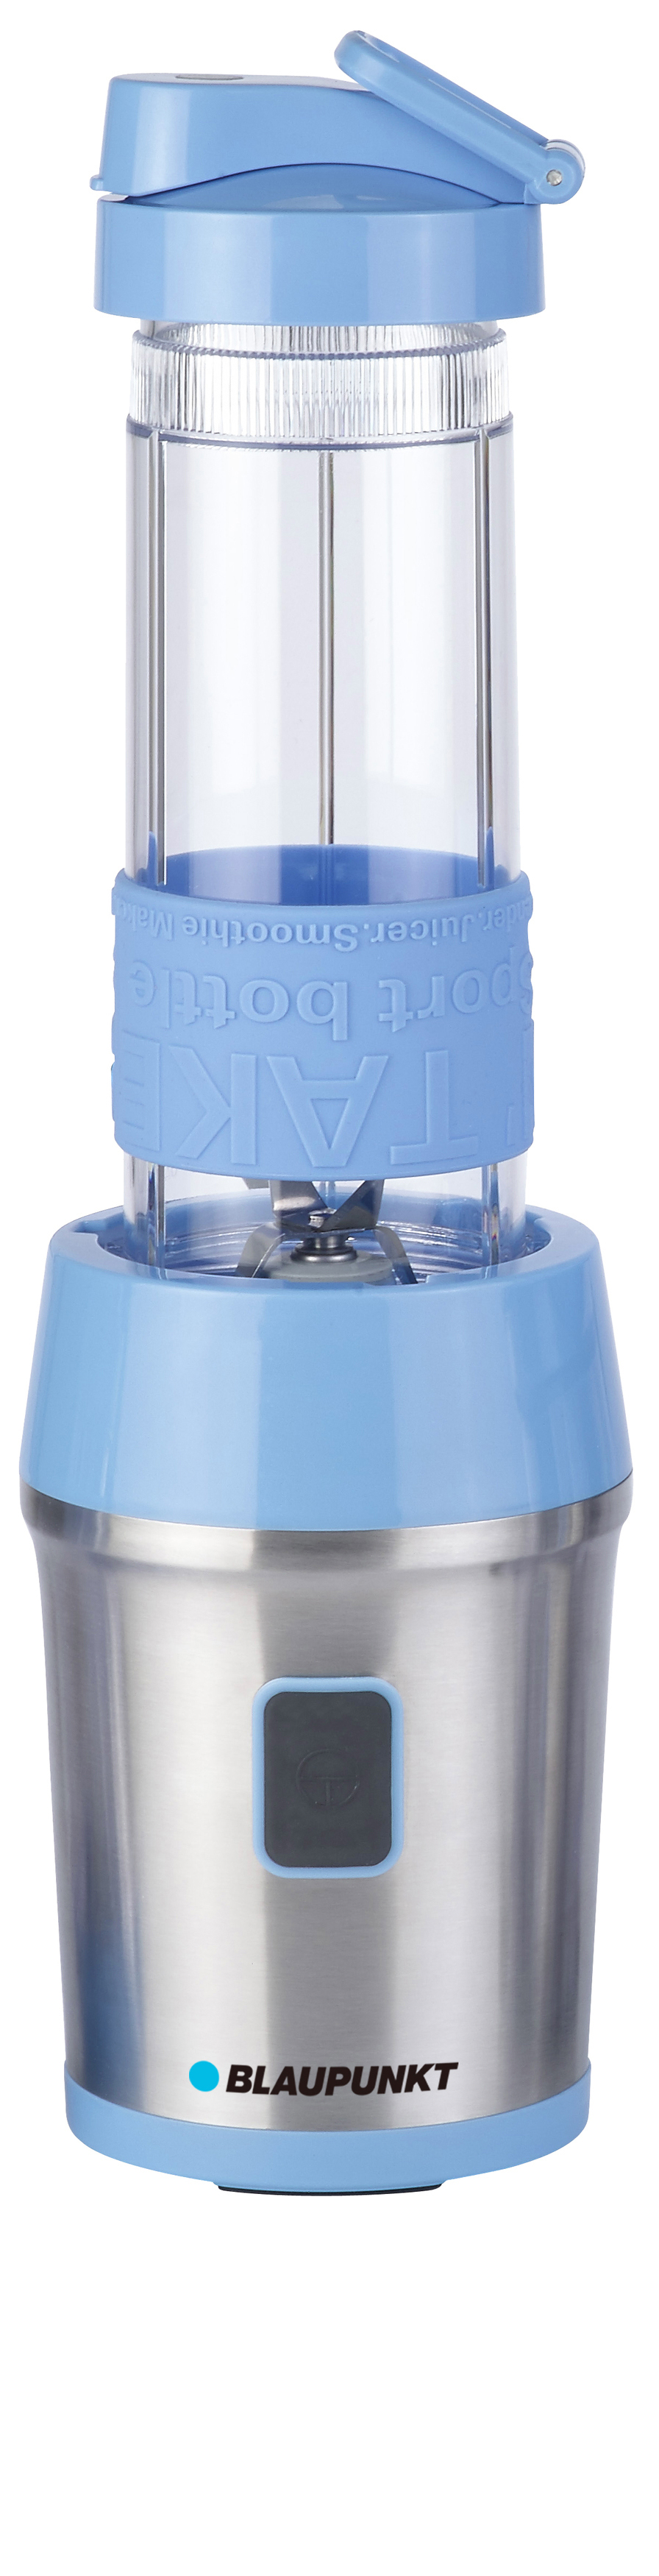 BLAUPUNKT Liter) TBP601BL (700 1.2 Blau/Grau Watt, Standmixer